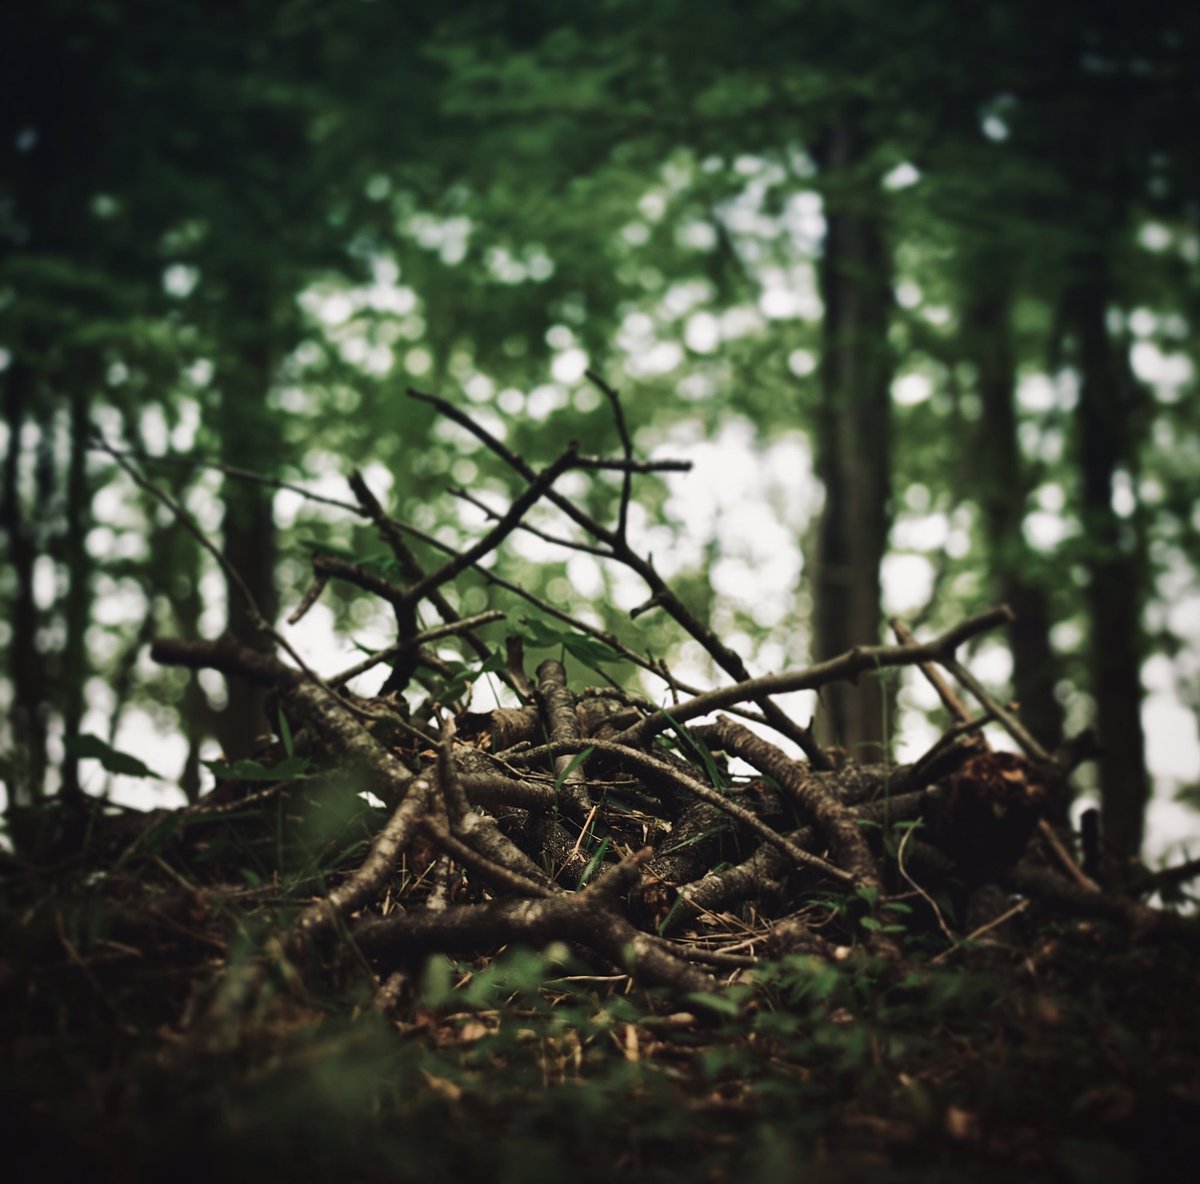 ・
ｂｒａｎｃｈ
・
・
#nature #leaf #branch 
#forestbath #forest
#naturephotograph